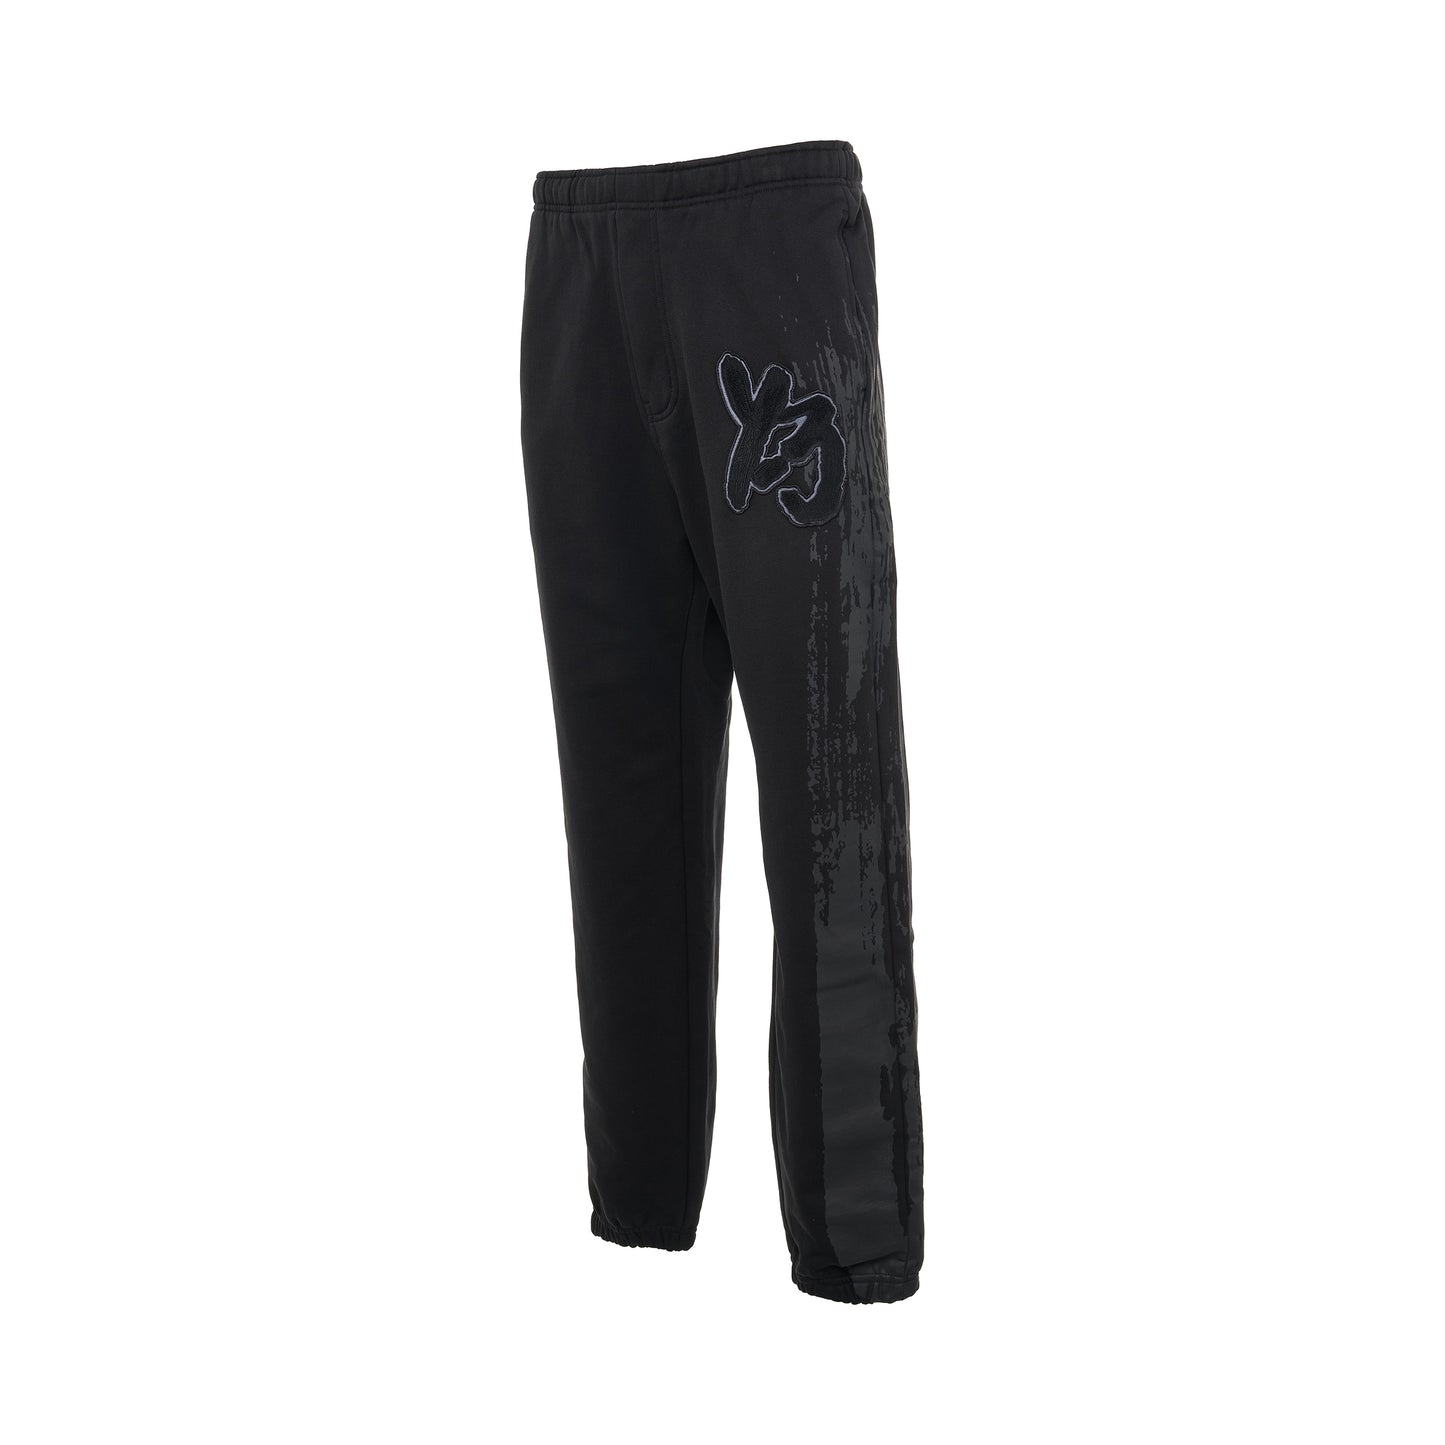 GFX Logo Sweatpants in Black